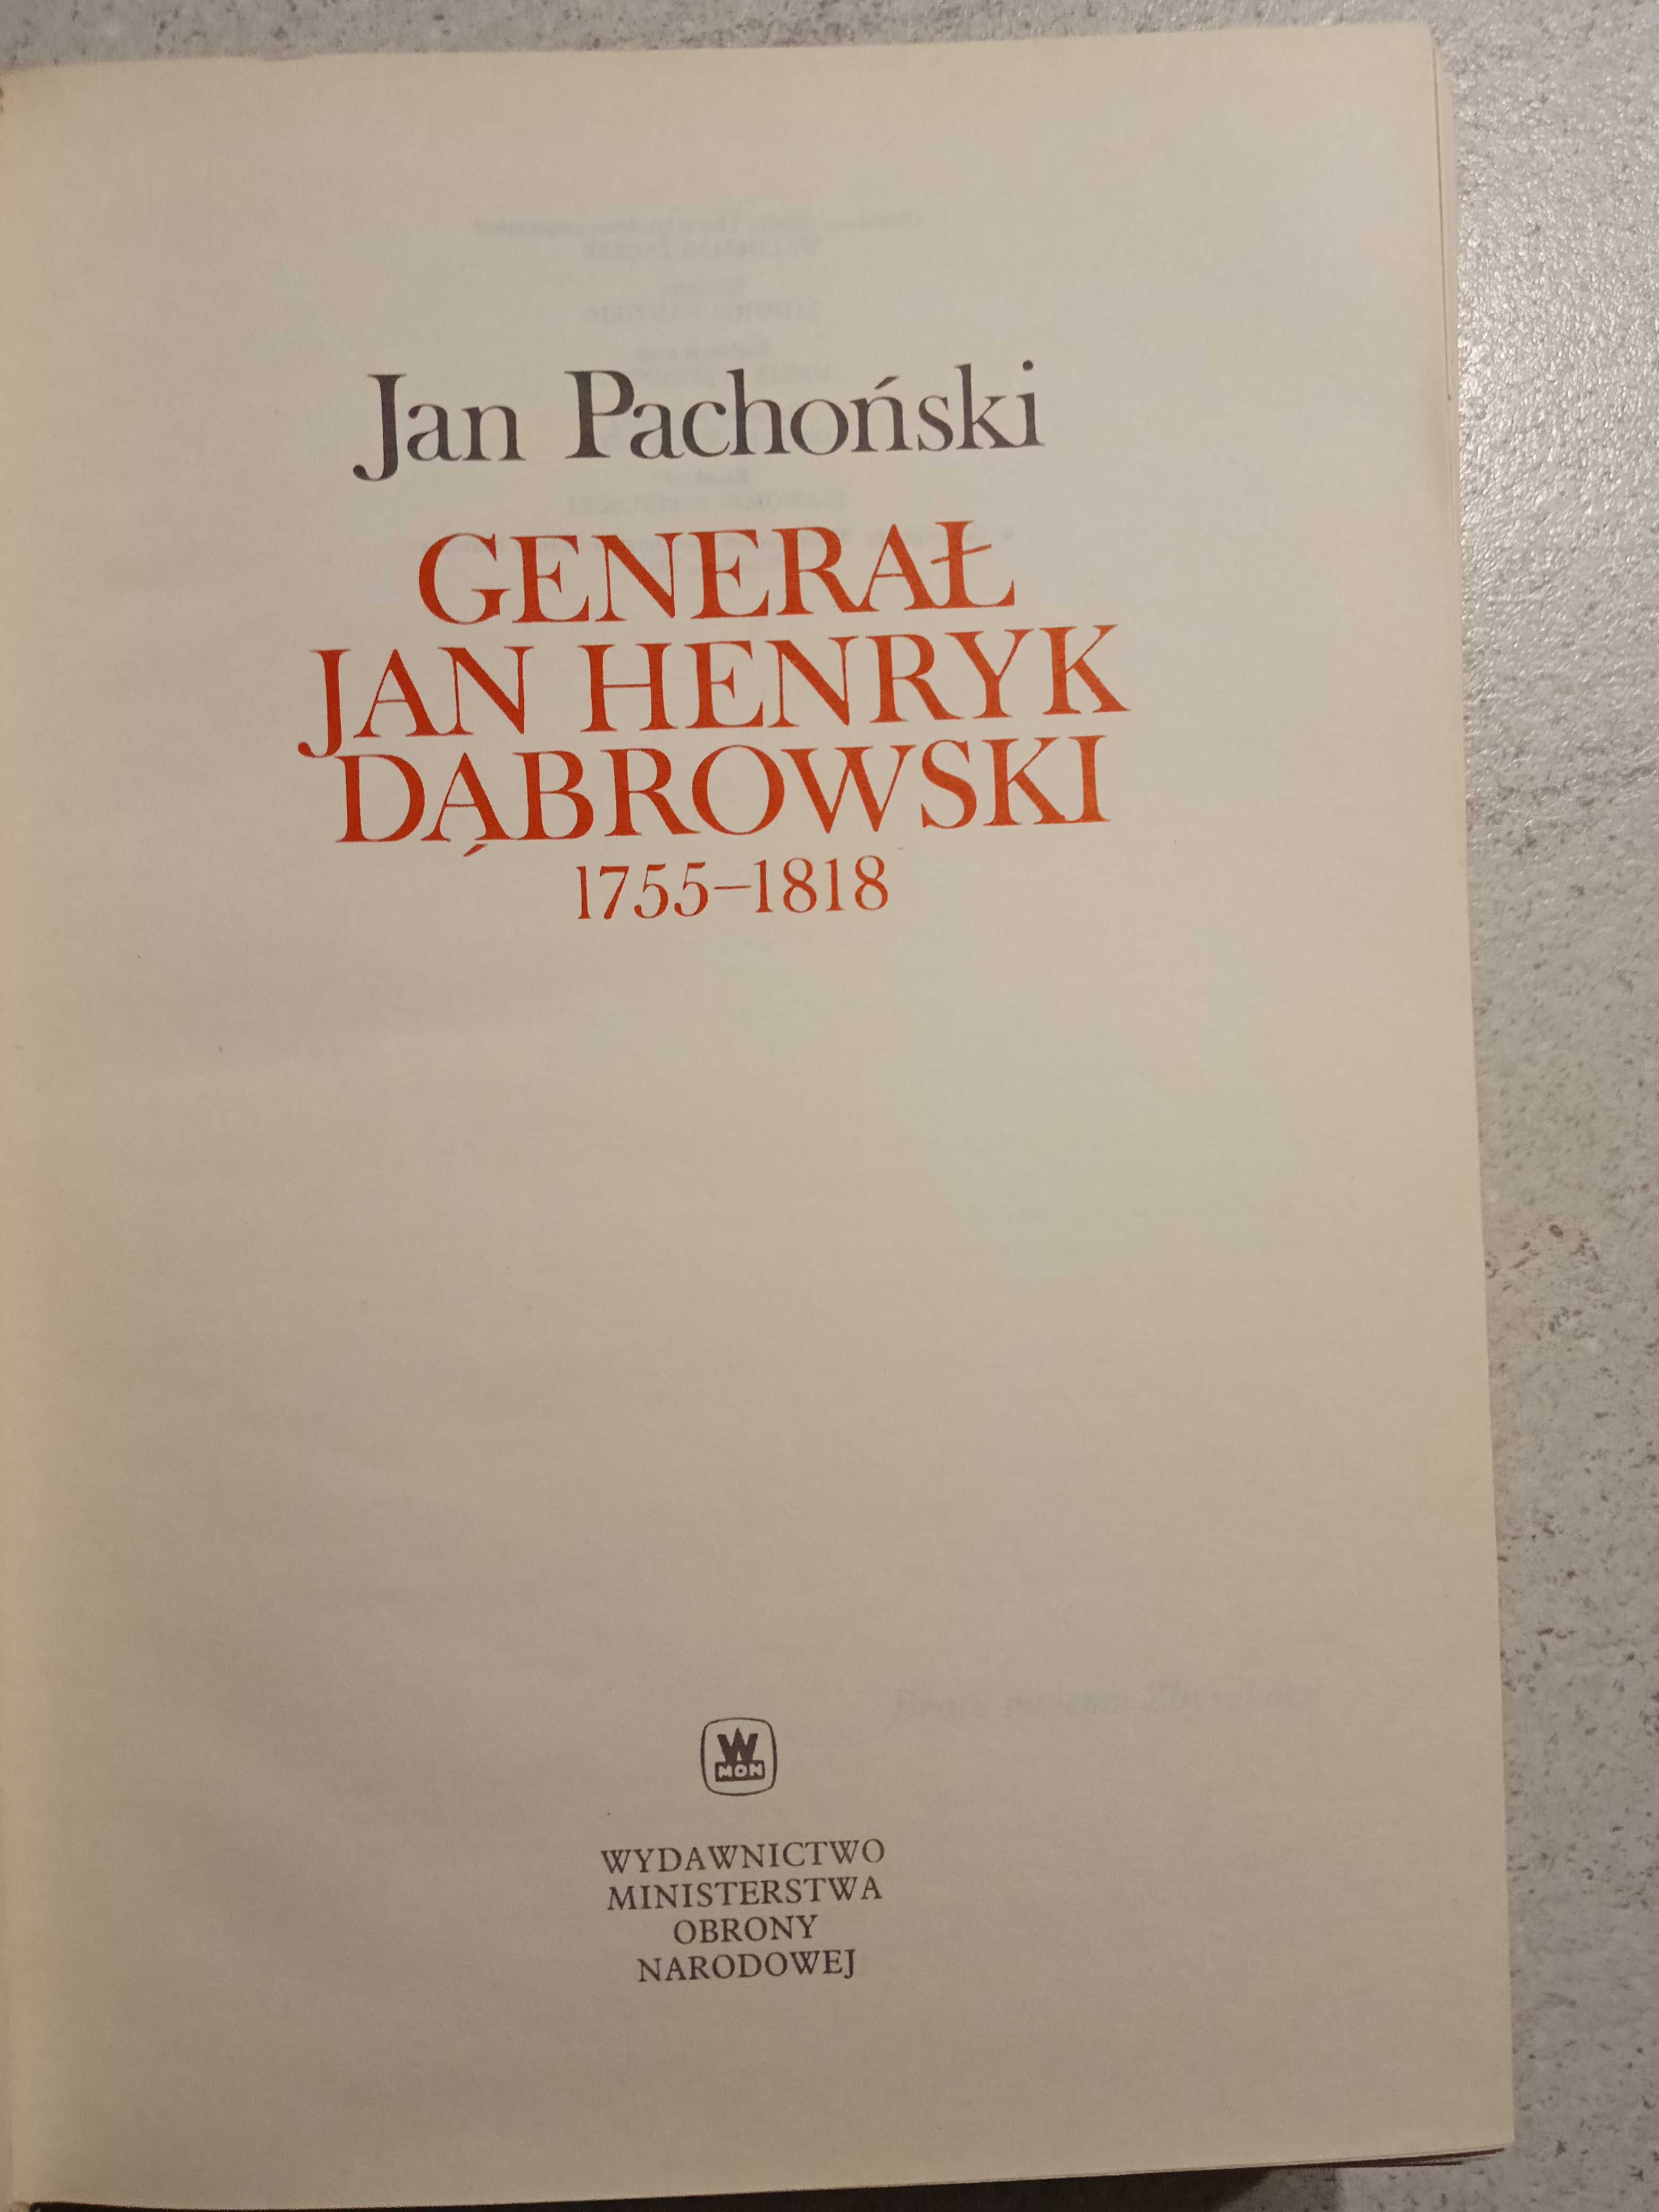 Jan Pachoński  "Generał Jan Henryk Dąbrowski"